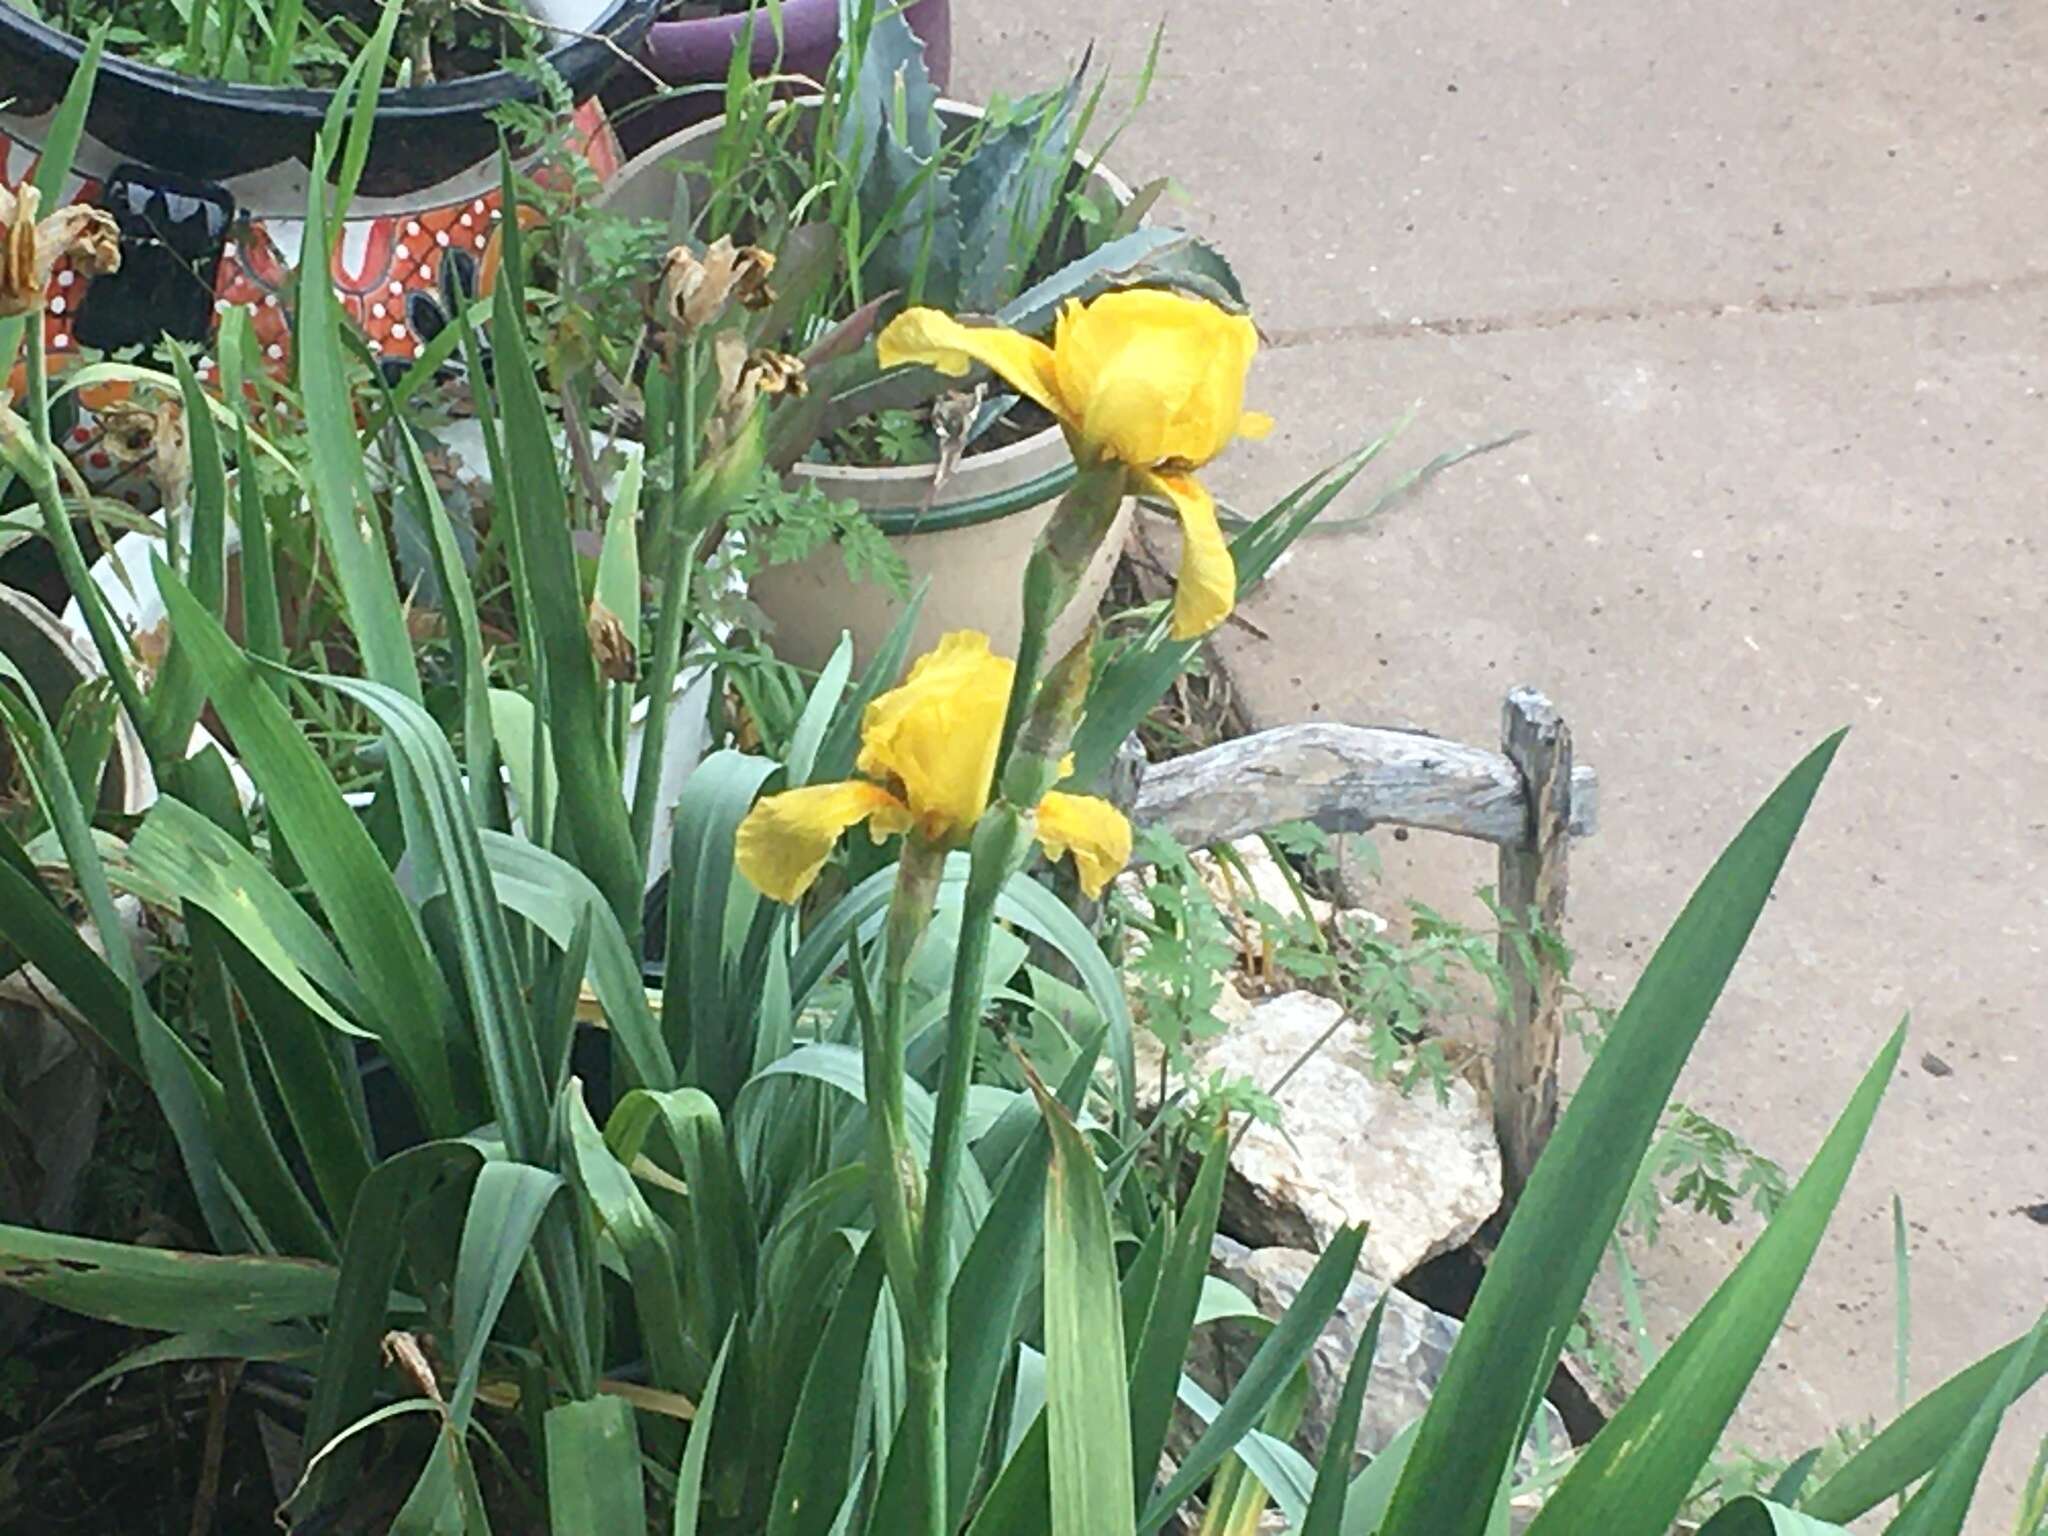 Image of Iris hybrida